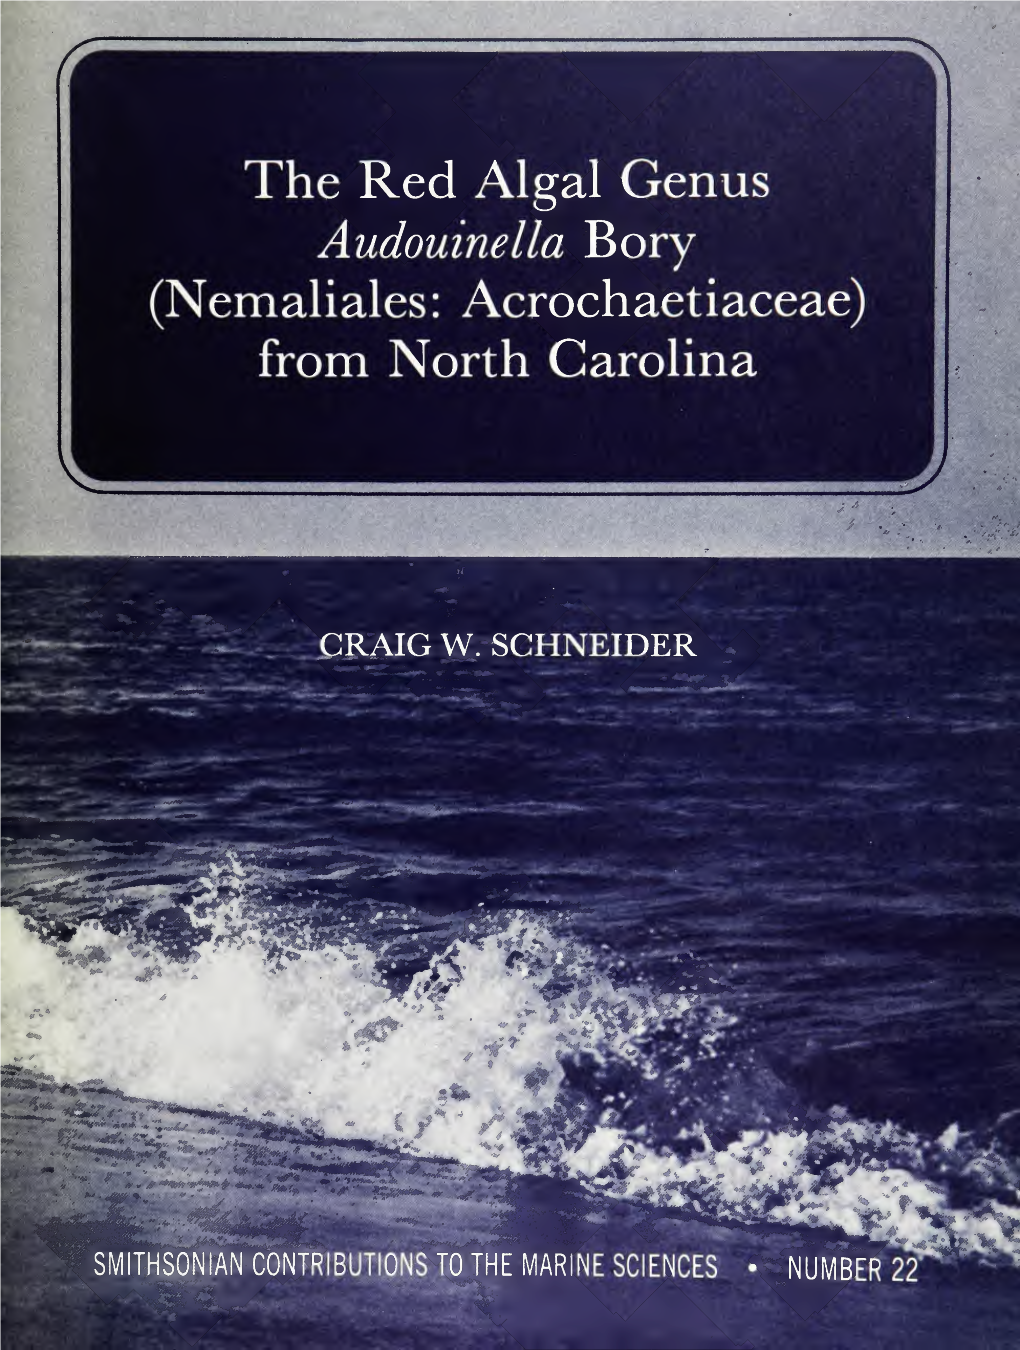 The Red Algal Genus Audouinella Bory Nemaliales: Acrochaetiaceae) from North Carolina